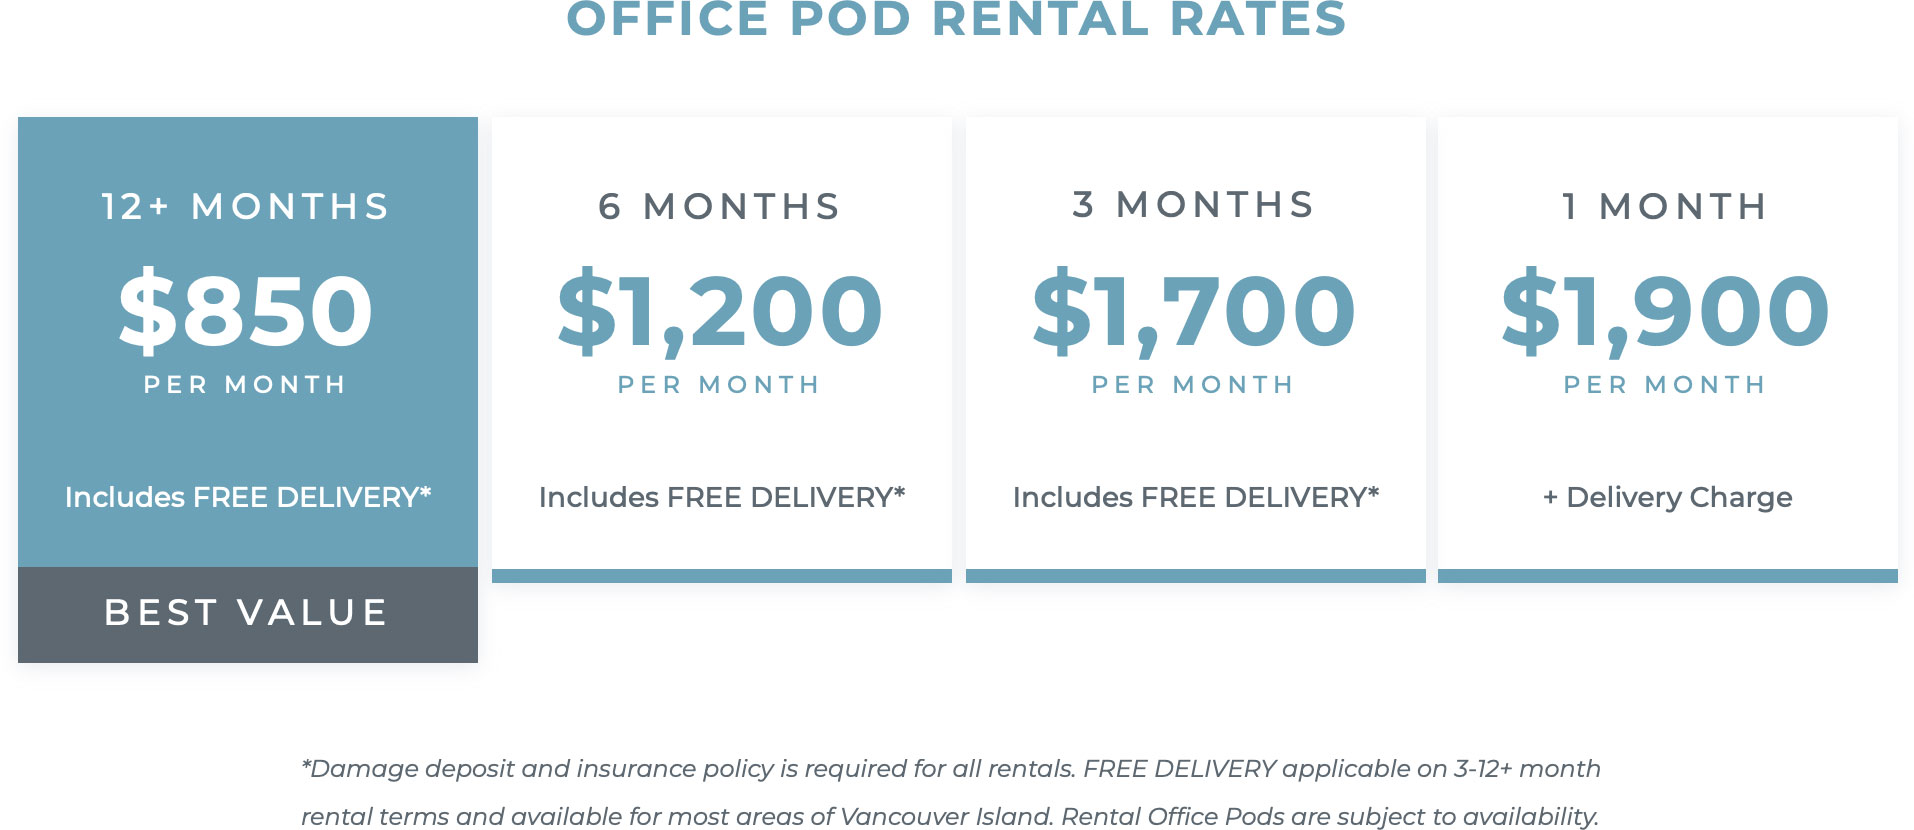 office pod rental rates